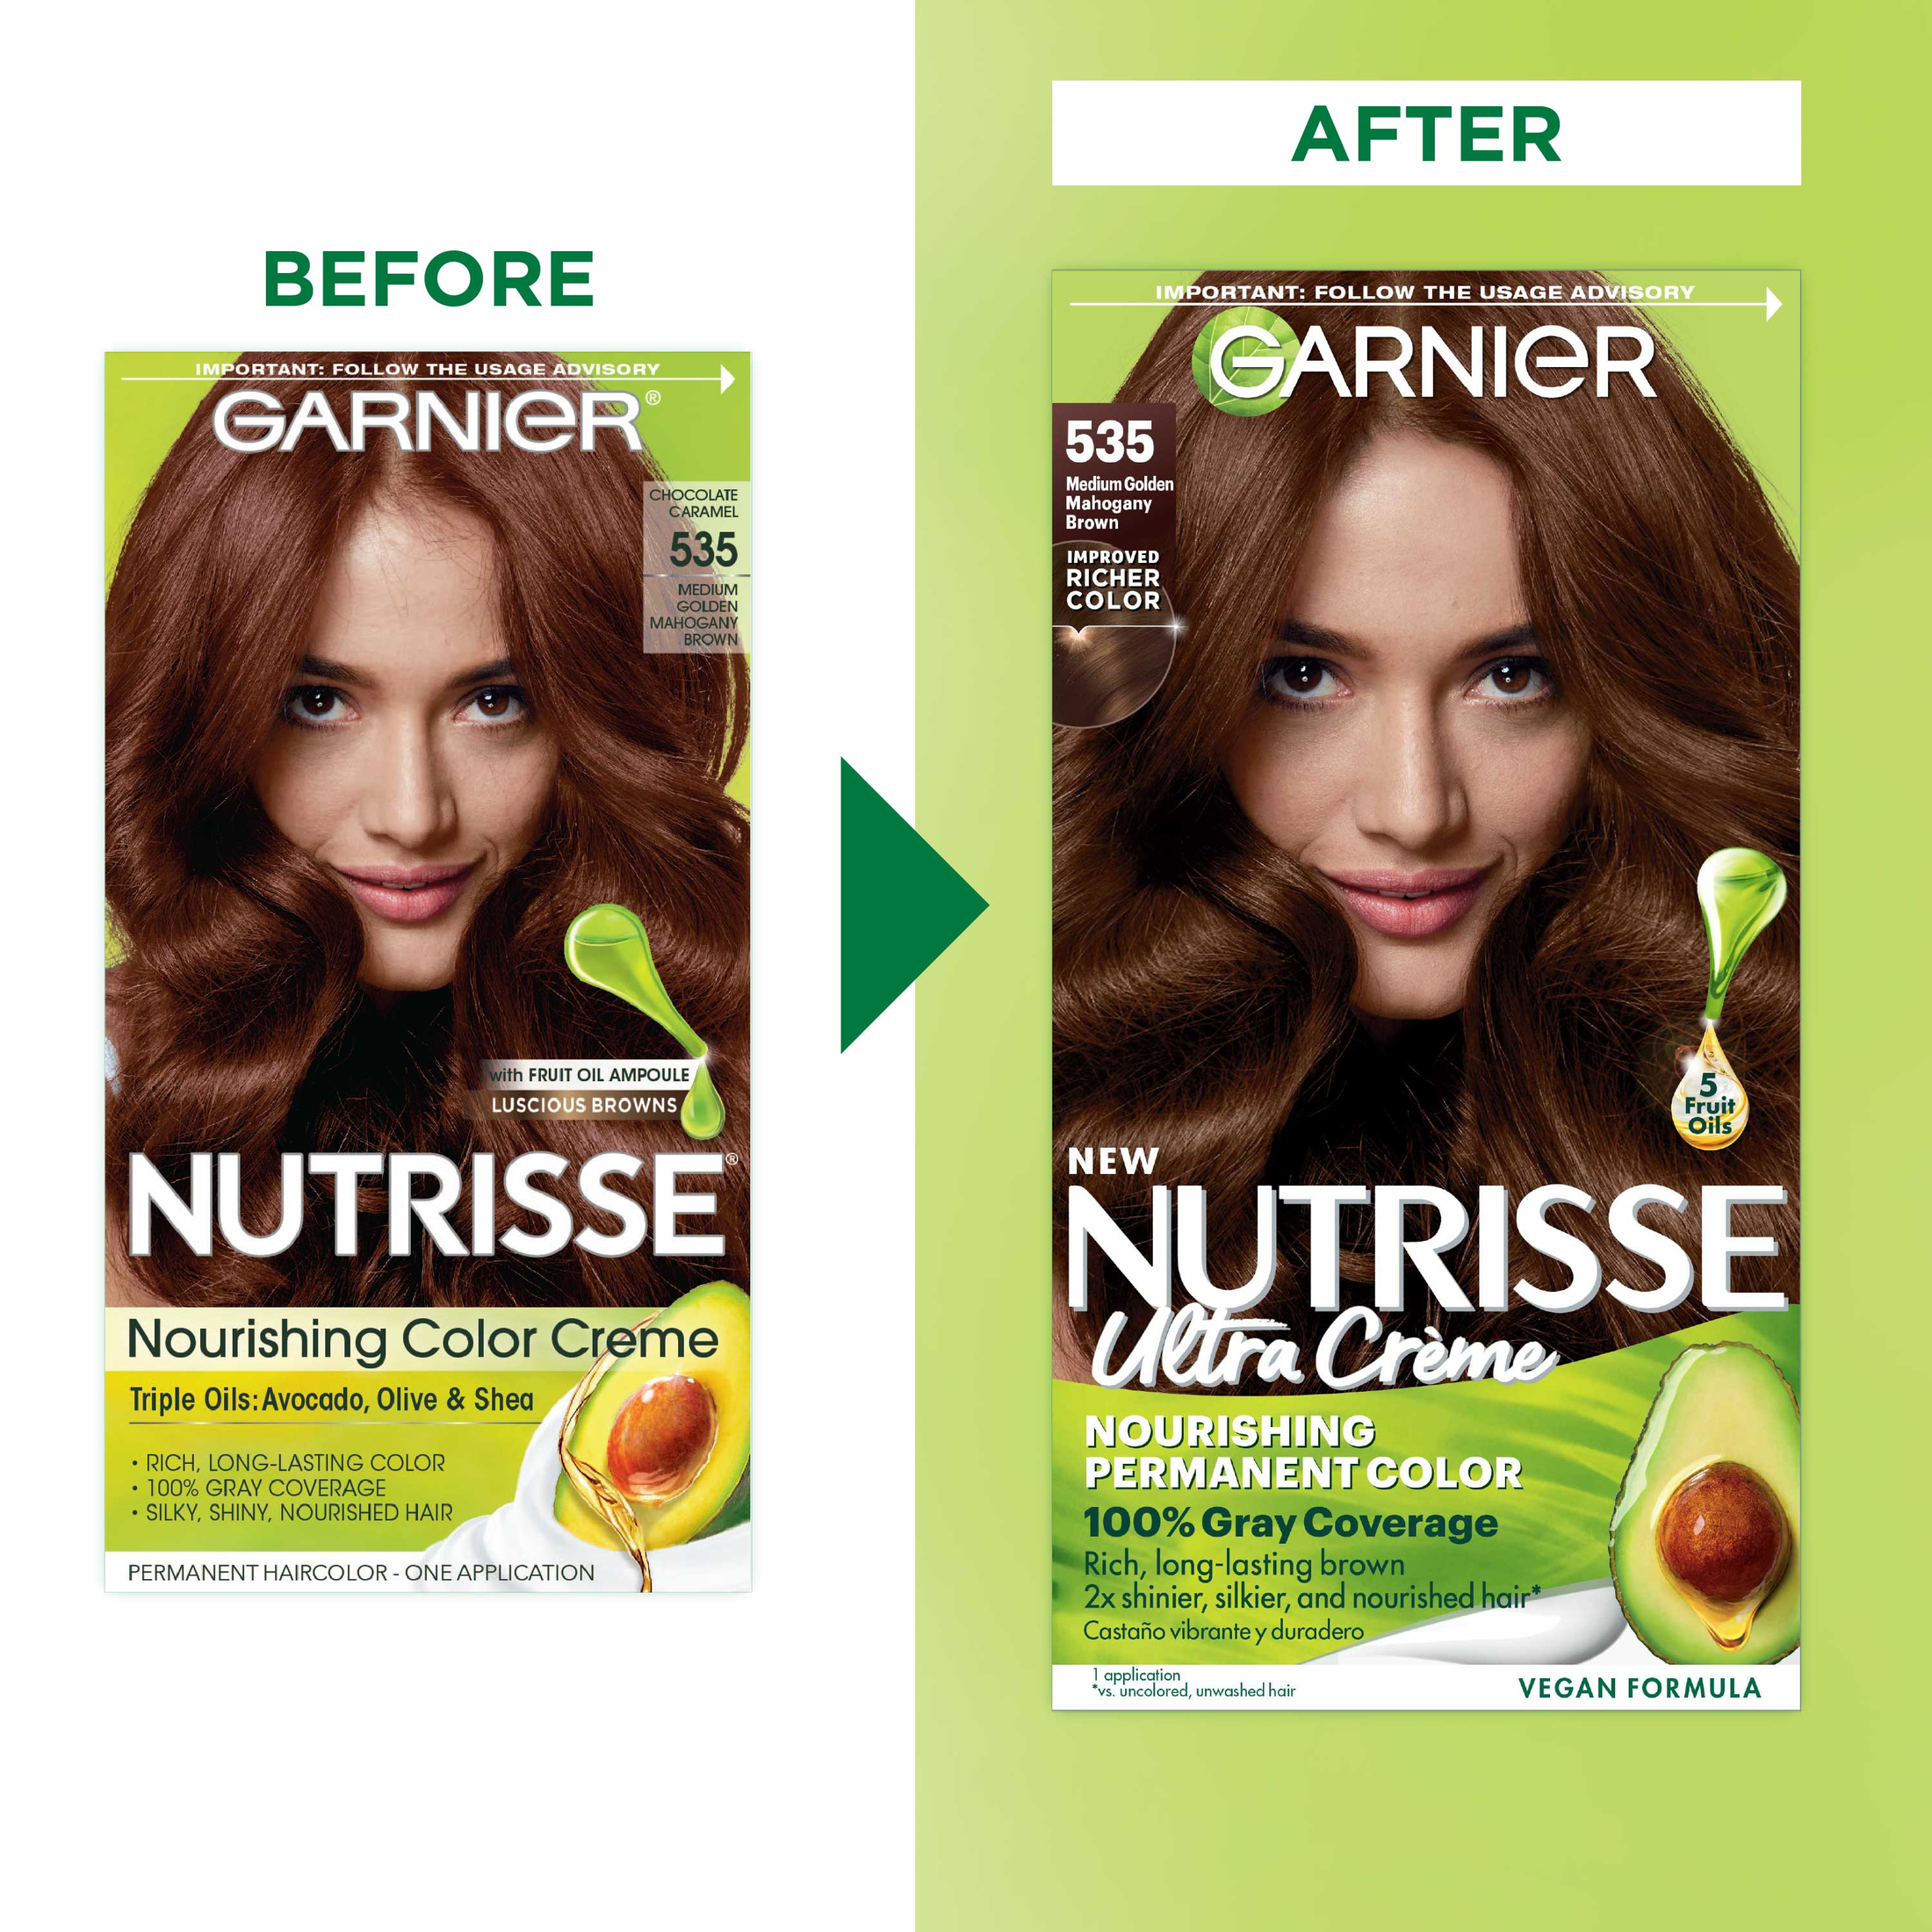 Garnier Nutrisse Nourishing Hair Color Creme, 535 Medium Gold Mahogany Brown - image 3 of 11